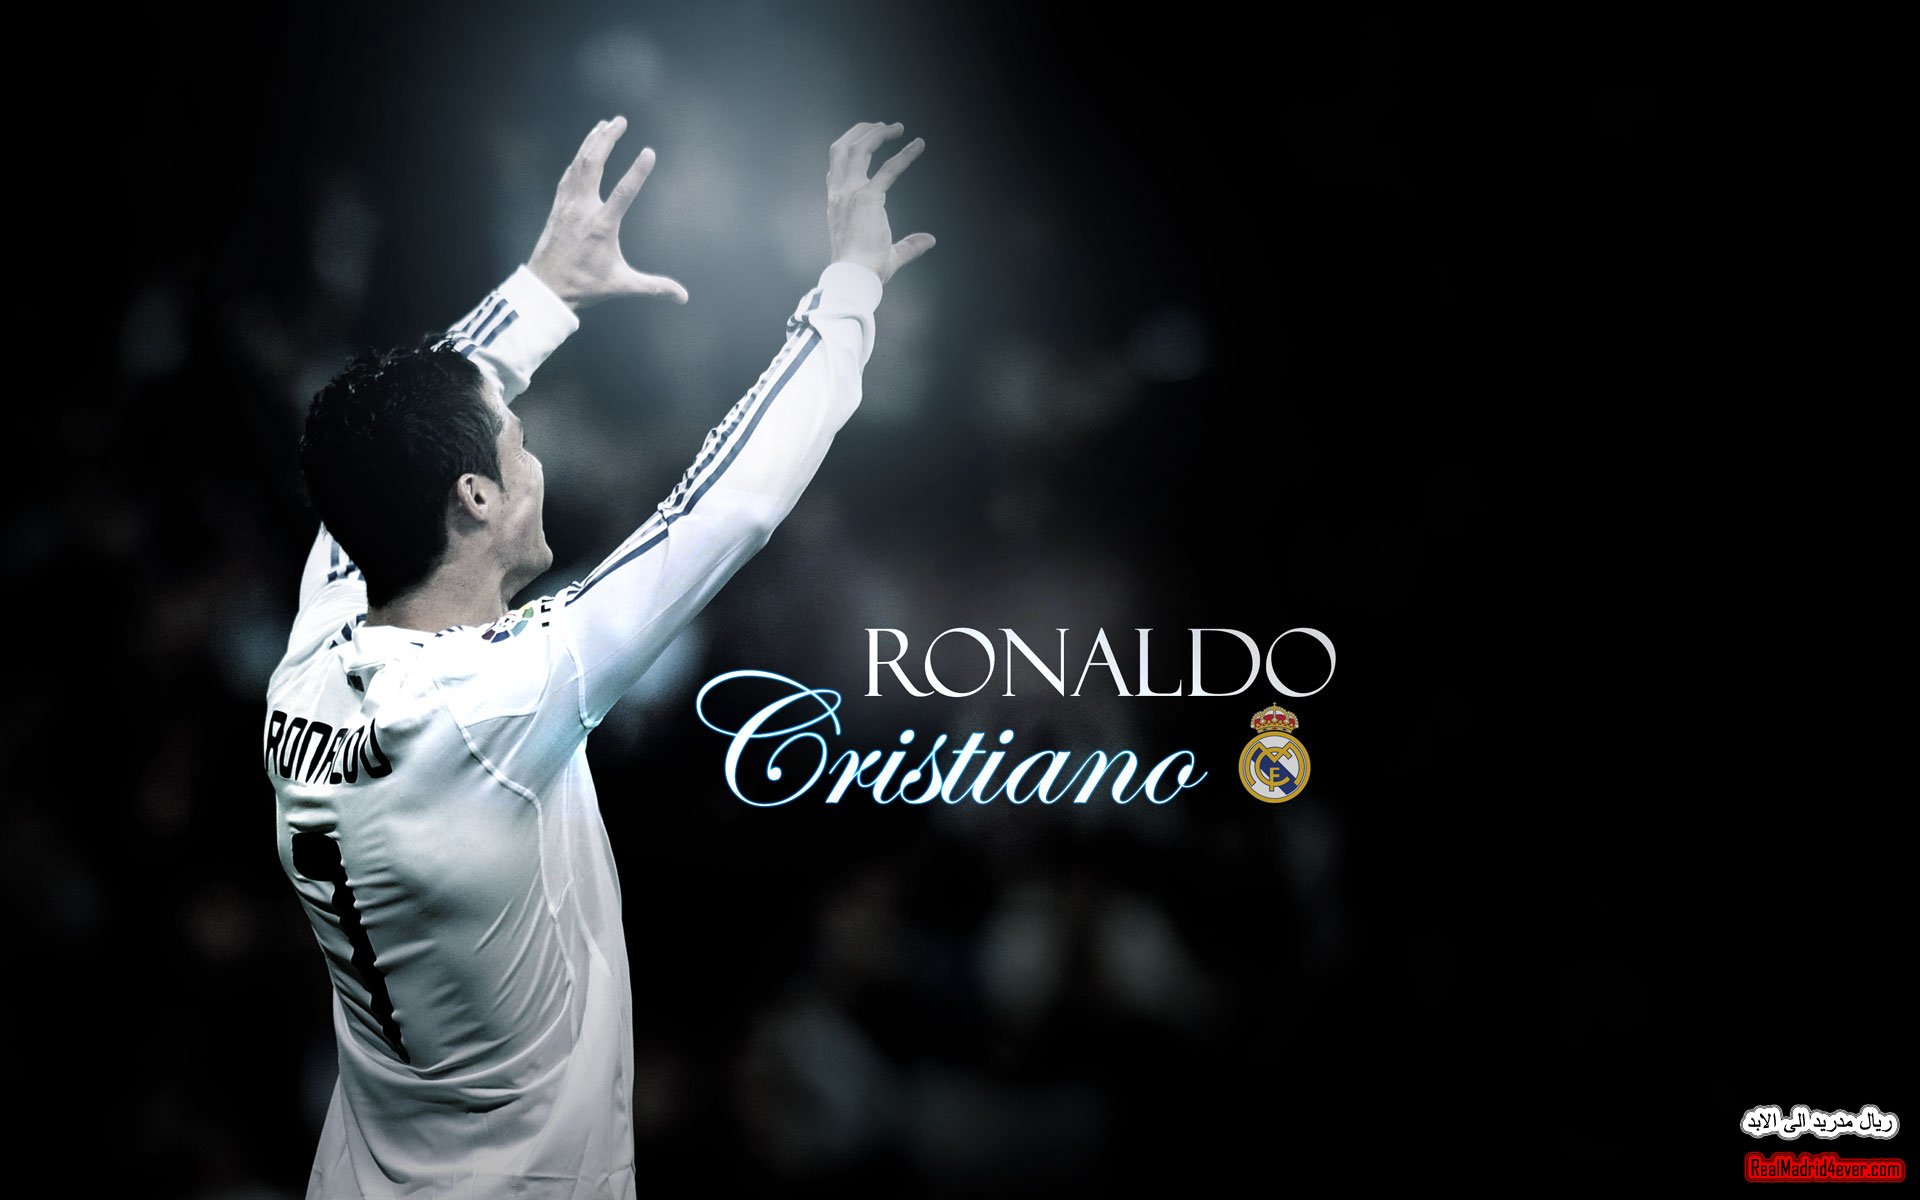 Madrid Ronaldo